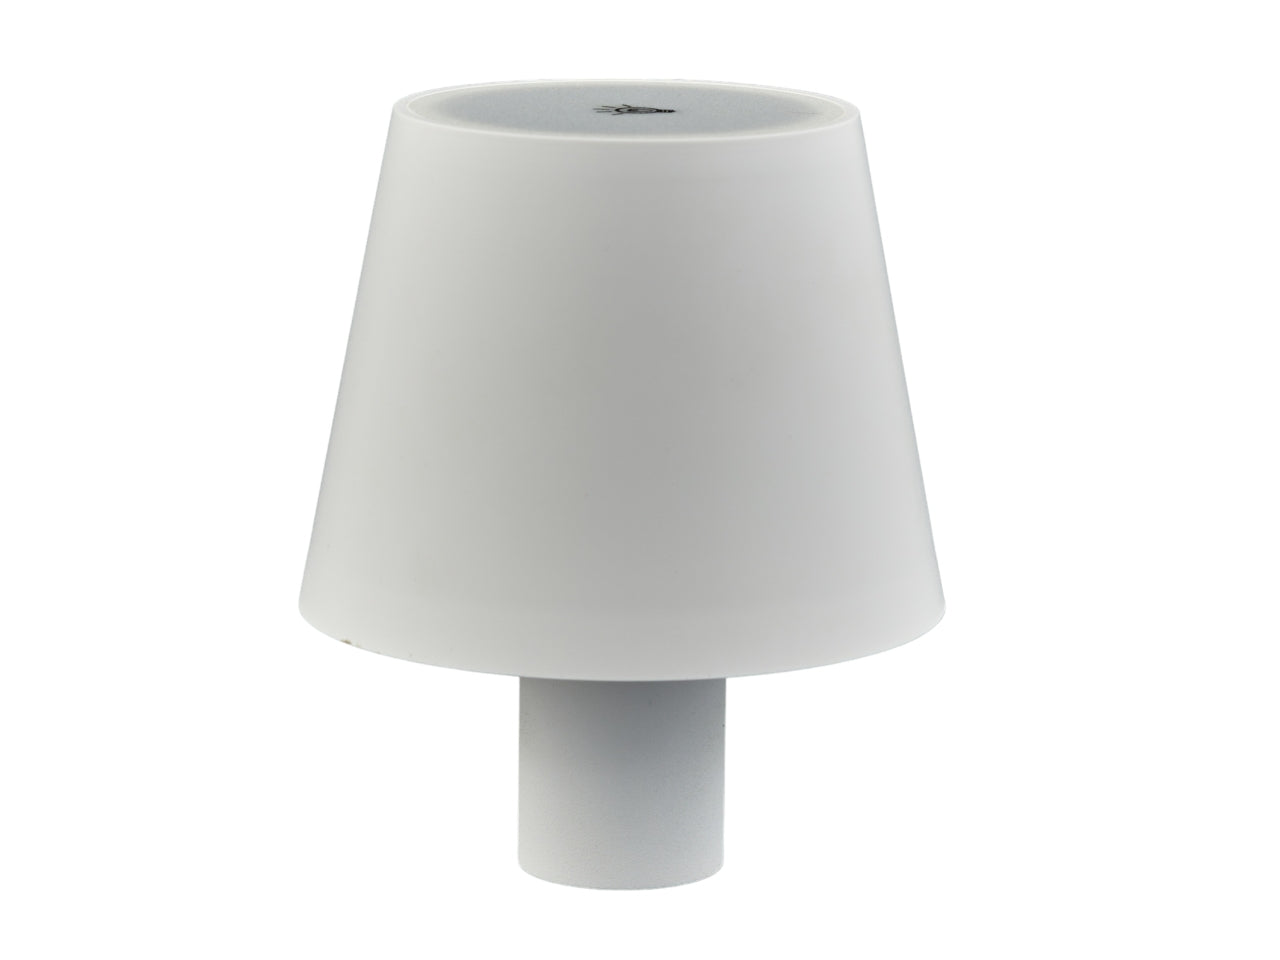 Lampada touch bianca luce semi diffusa, stile moderno, 13,5x10,7 cm - C.B.R.